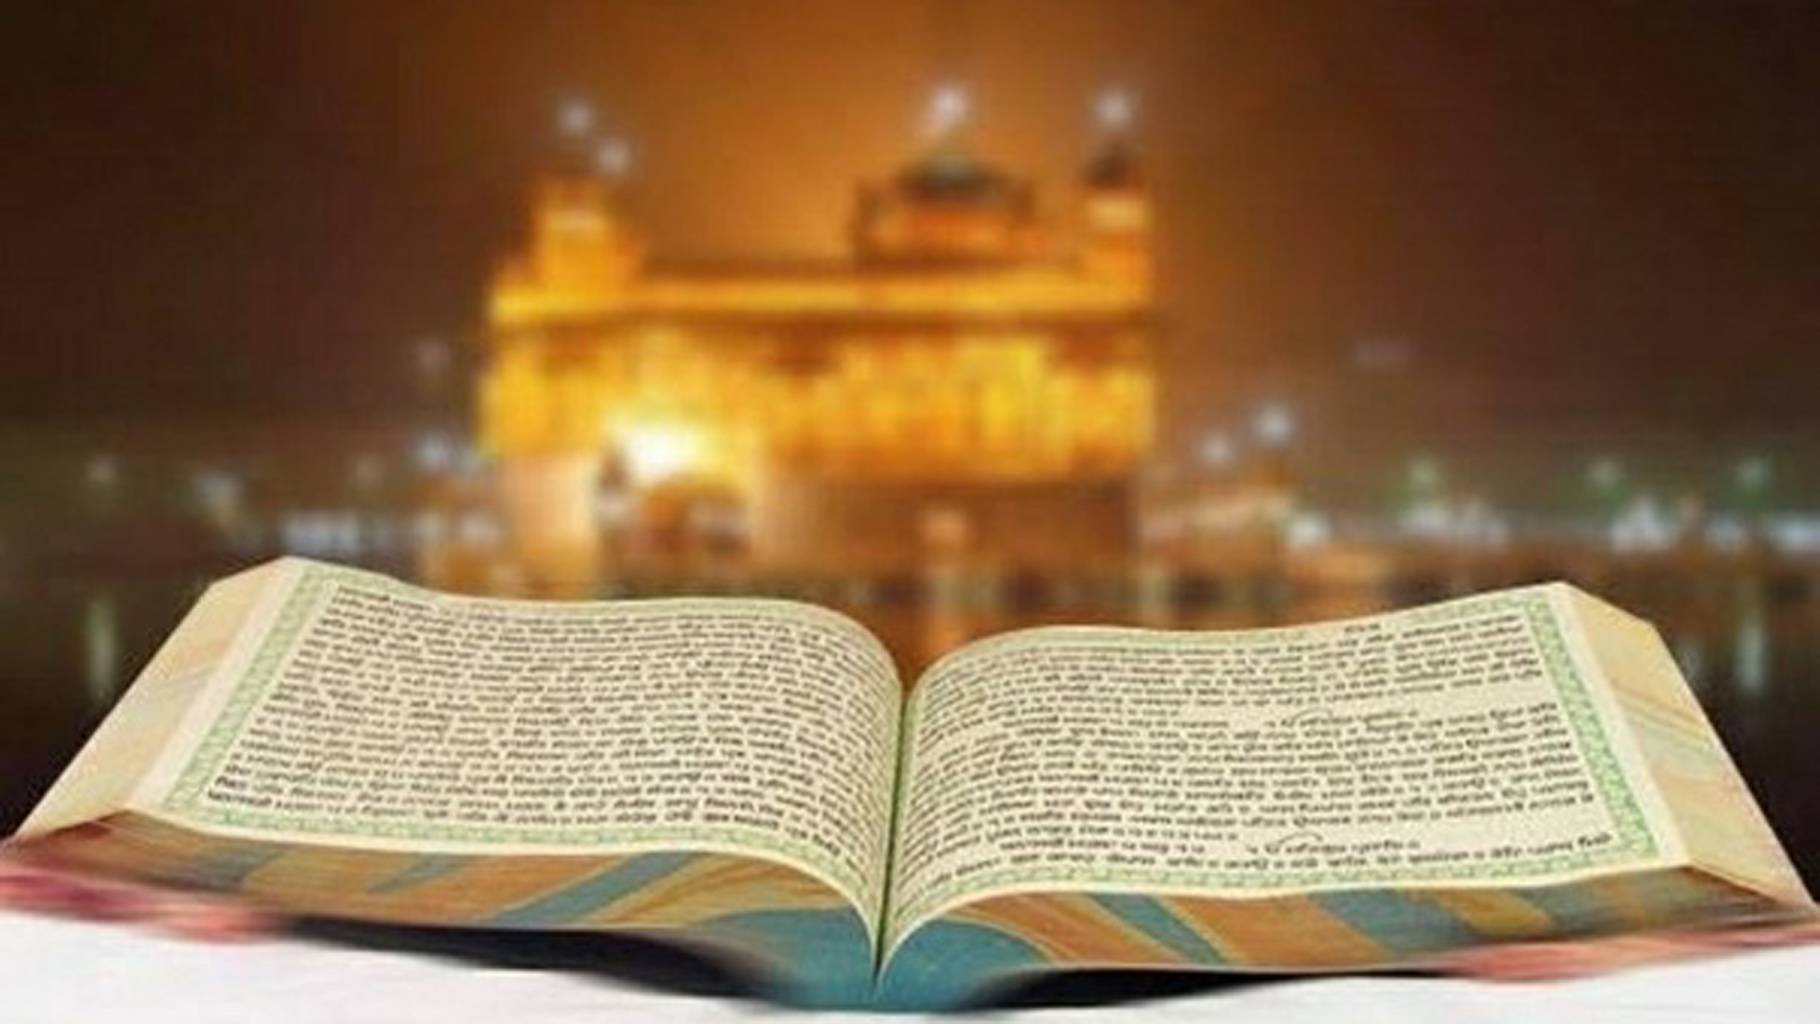 Guru Granth Sahib Ji Wallpapers - Top Free Guru Granth Sahib Ji Backgrounds  - WallpaperAccess